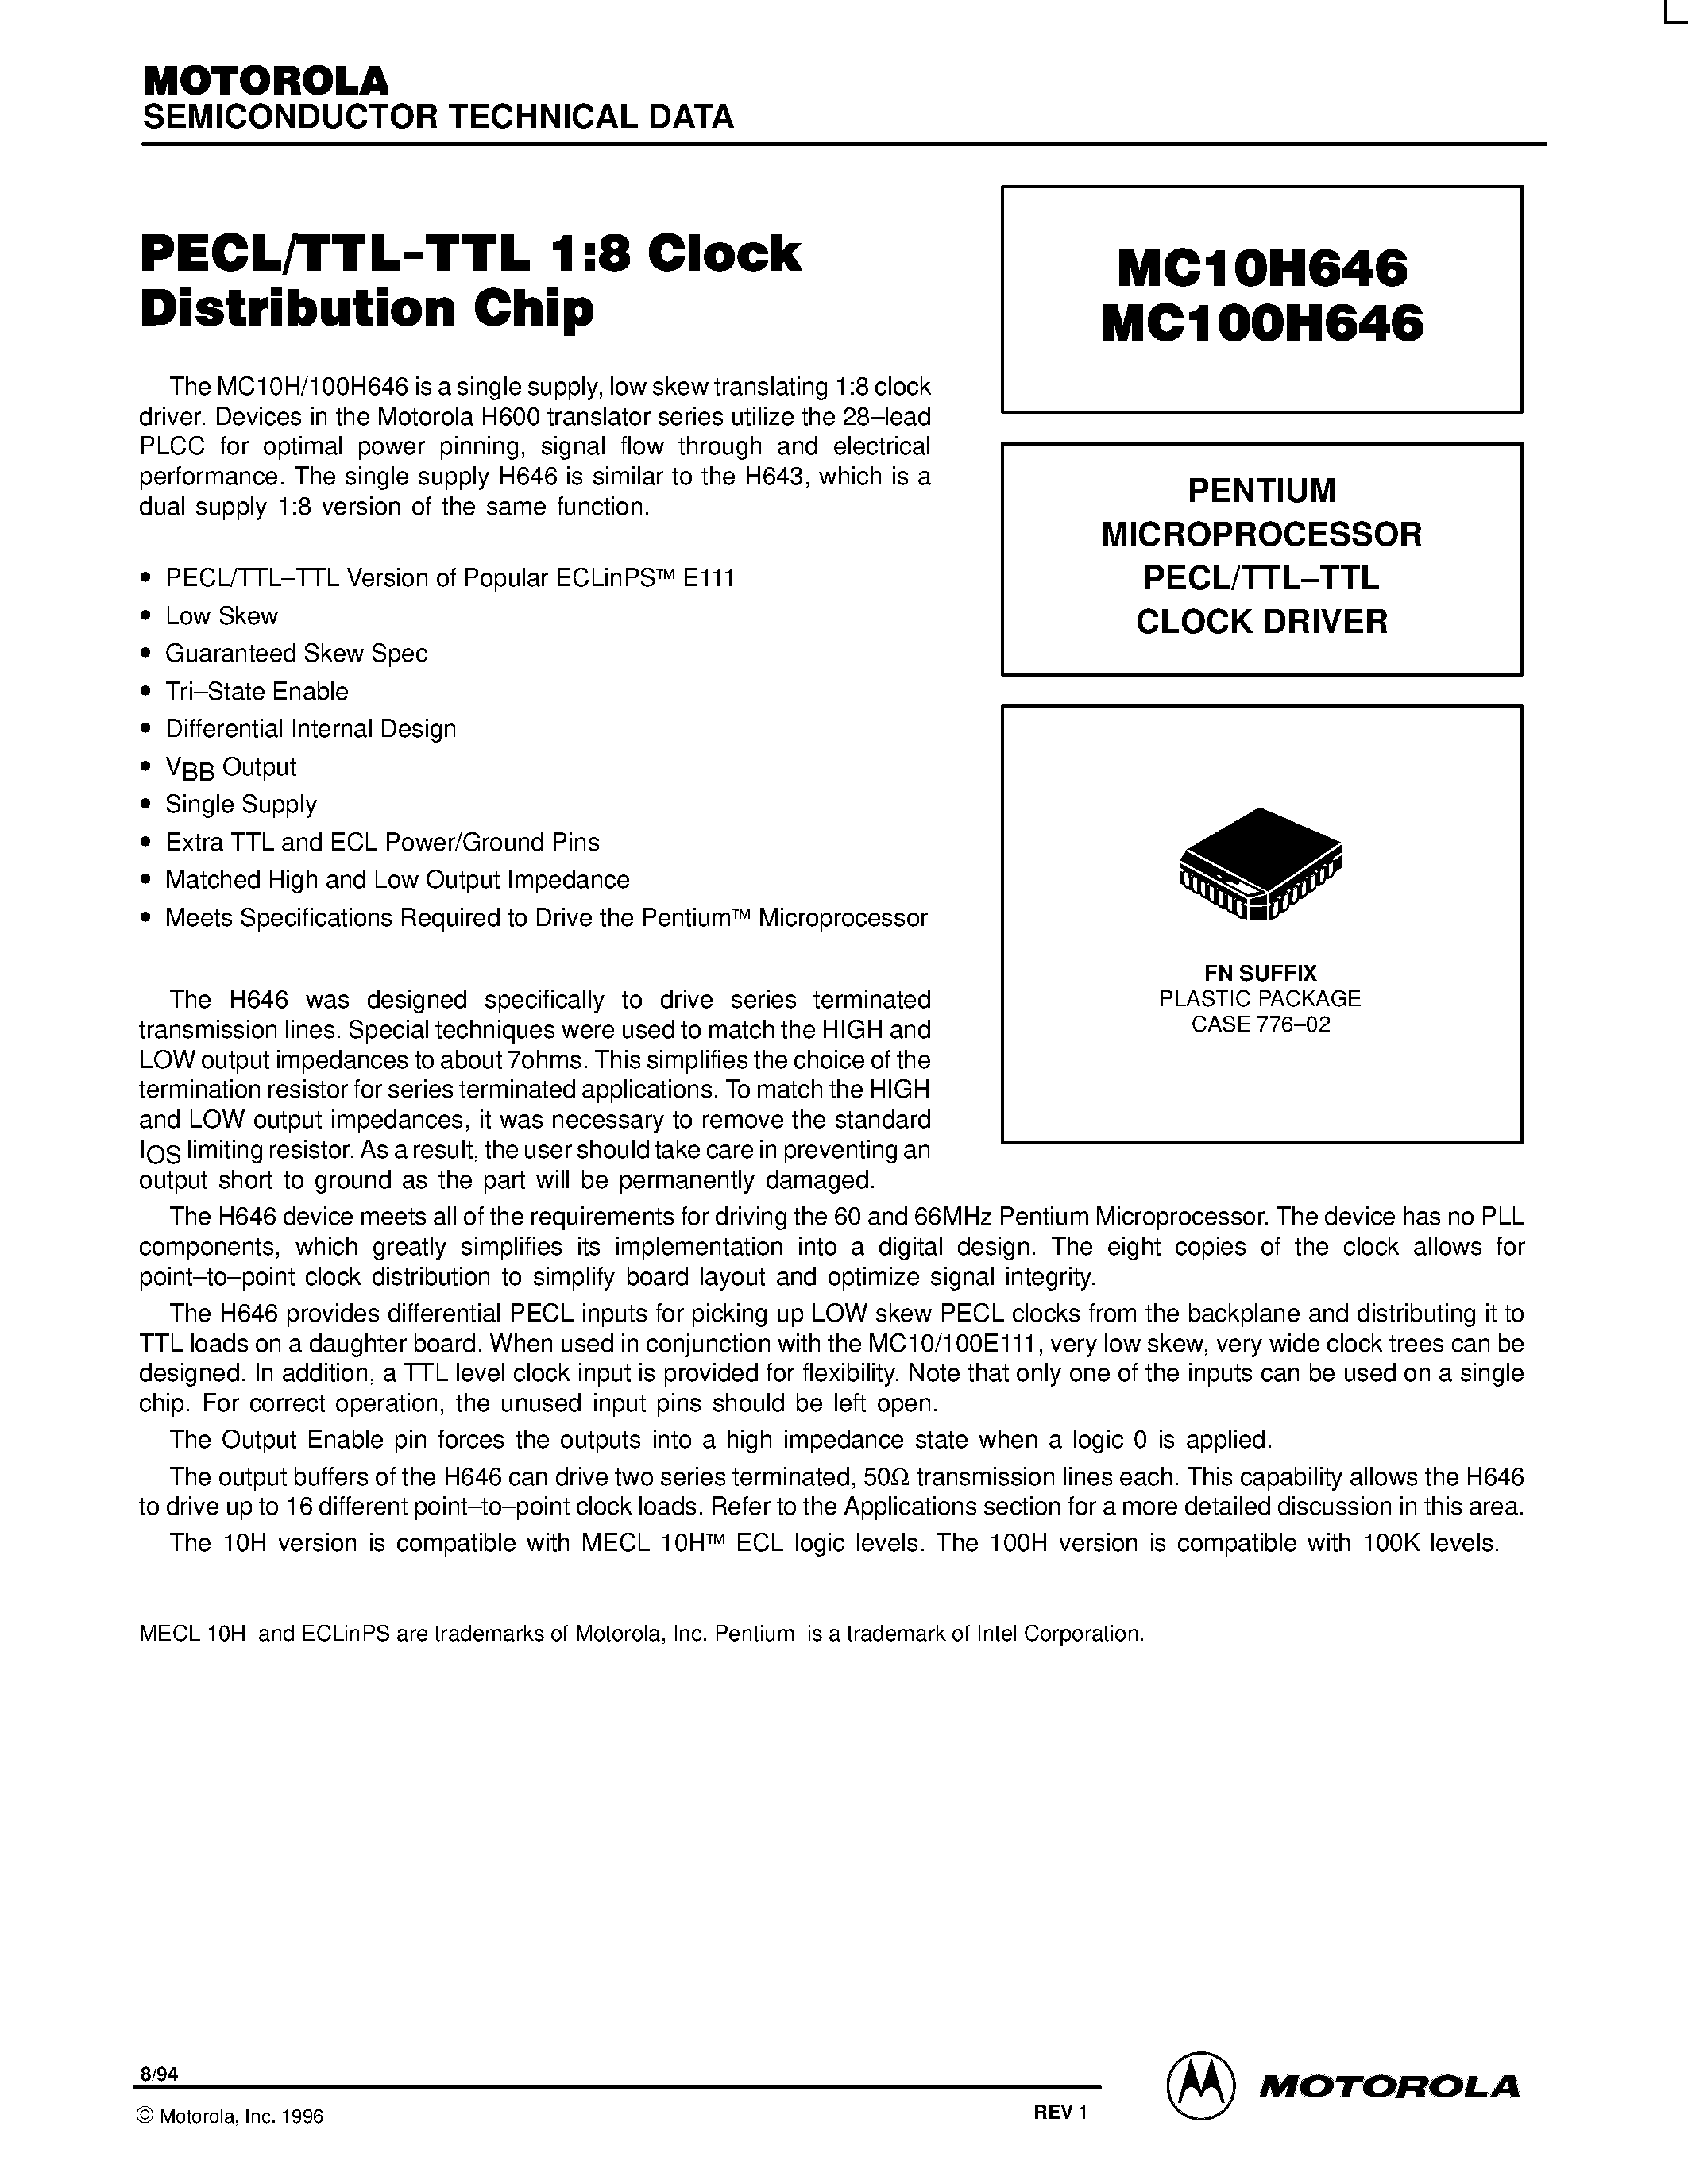 Даташит MC100H646FN - PENTIUM MICROPROCESSOR PECL/TTL-TTL CLOCK DRIVER страница 1